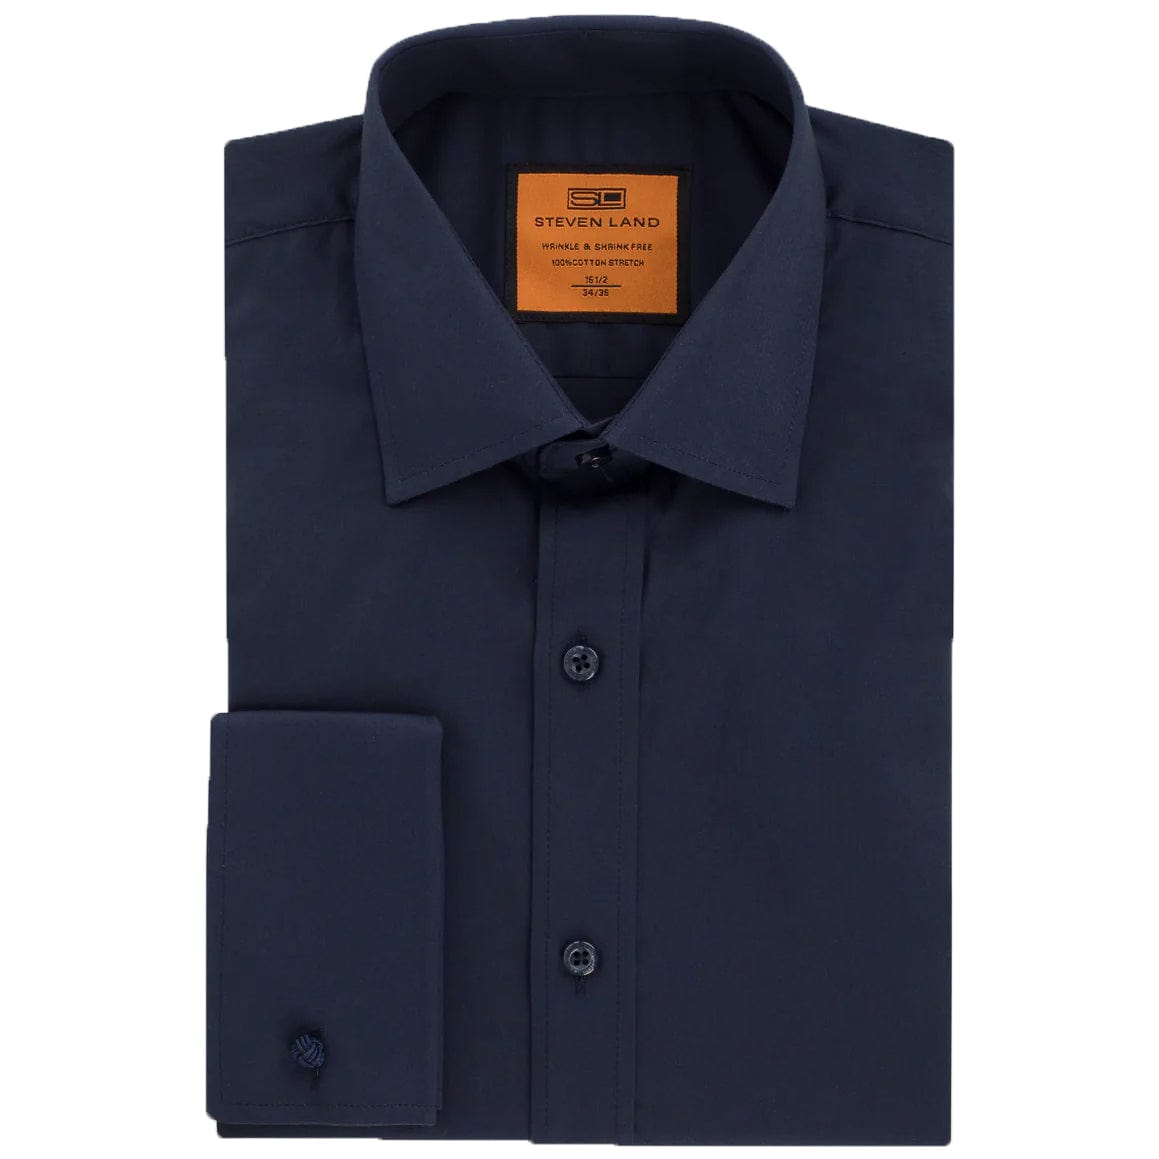 LND NECKWEAR INC. S CF MIDNIGHT / 15.5 Steven Land Dress Shirt| Classic Fit | French Cuff | 100% Cotton/Ds115f 4/5